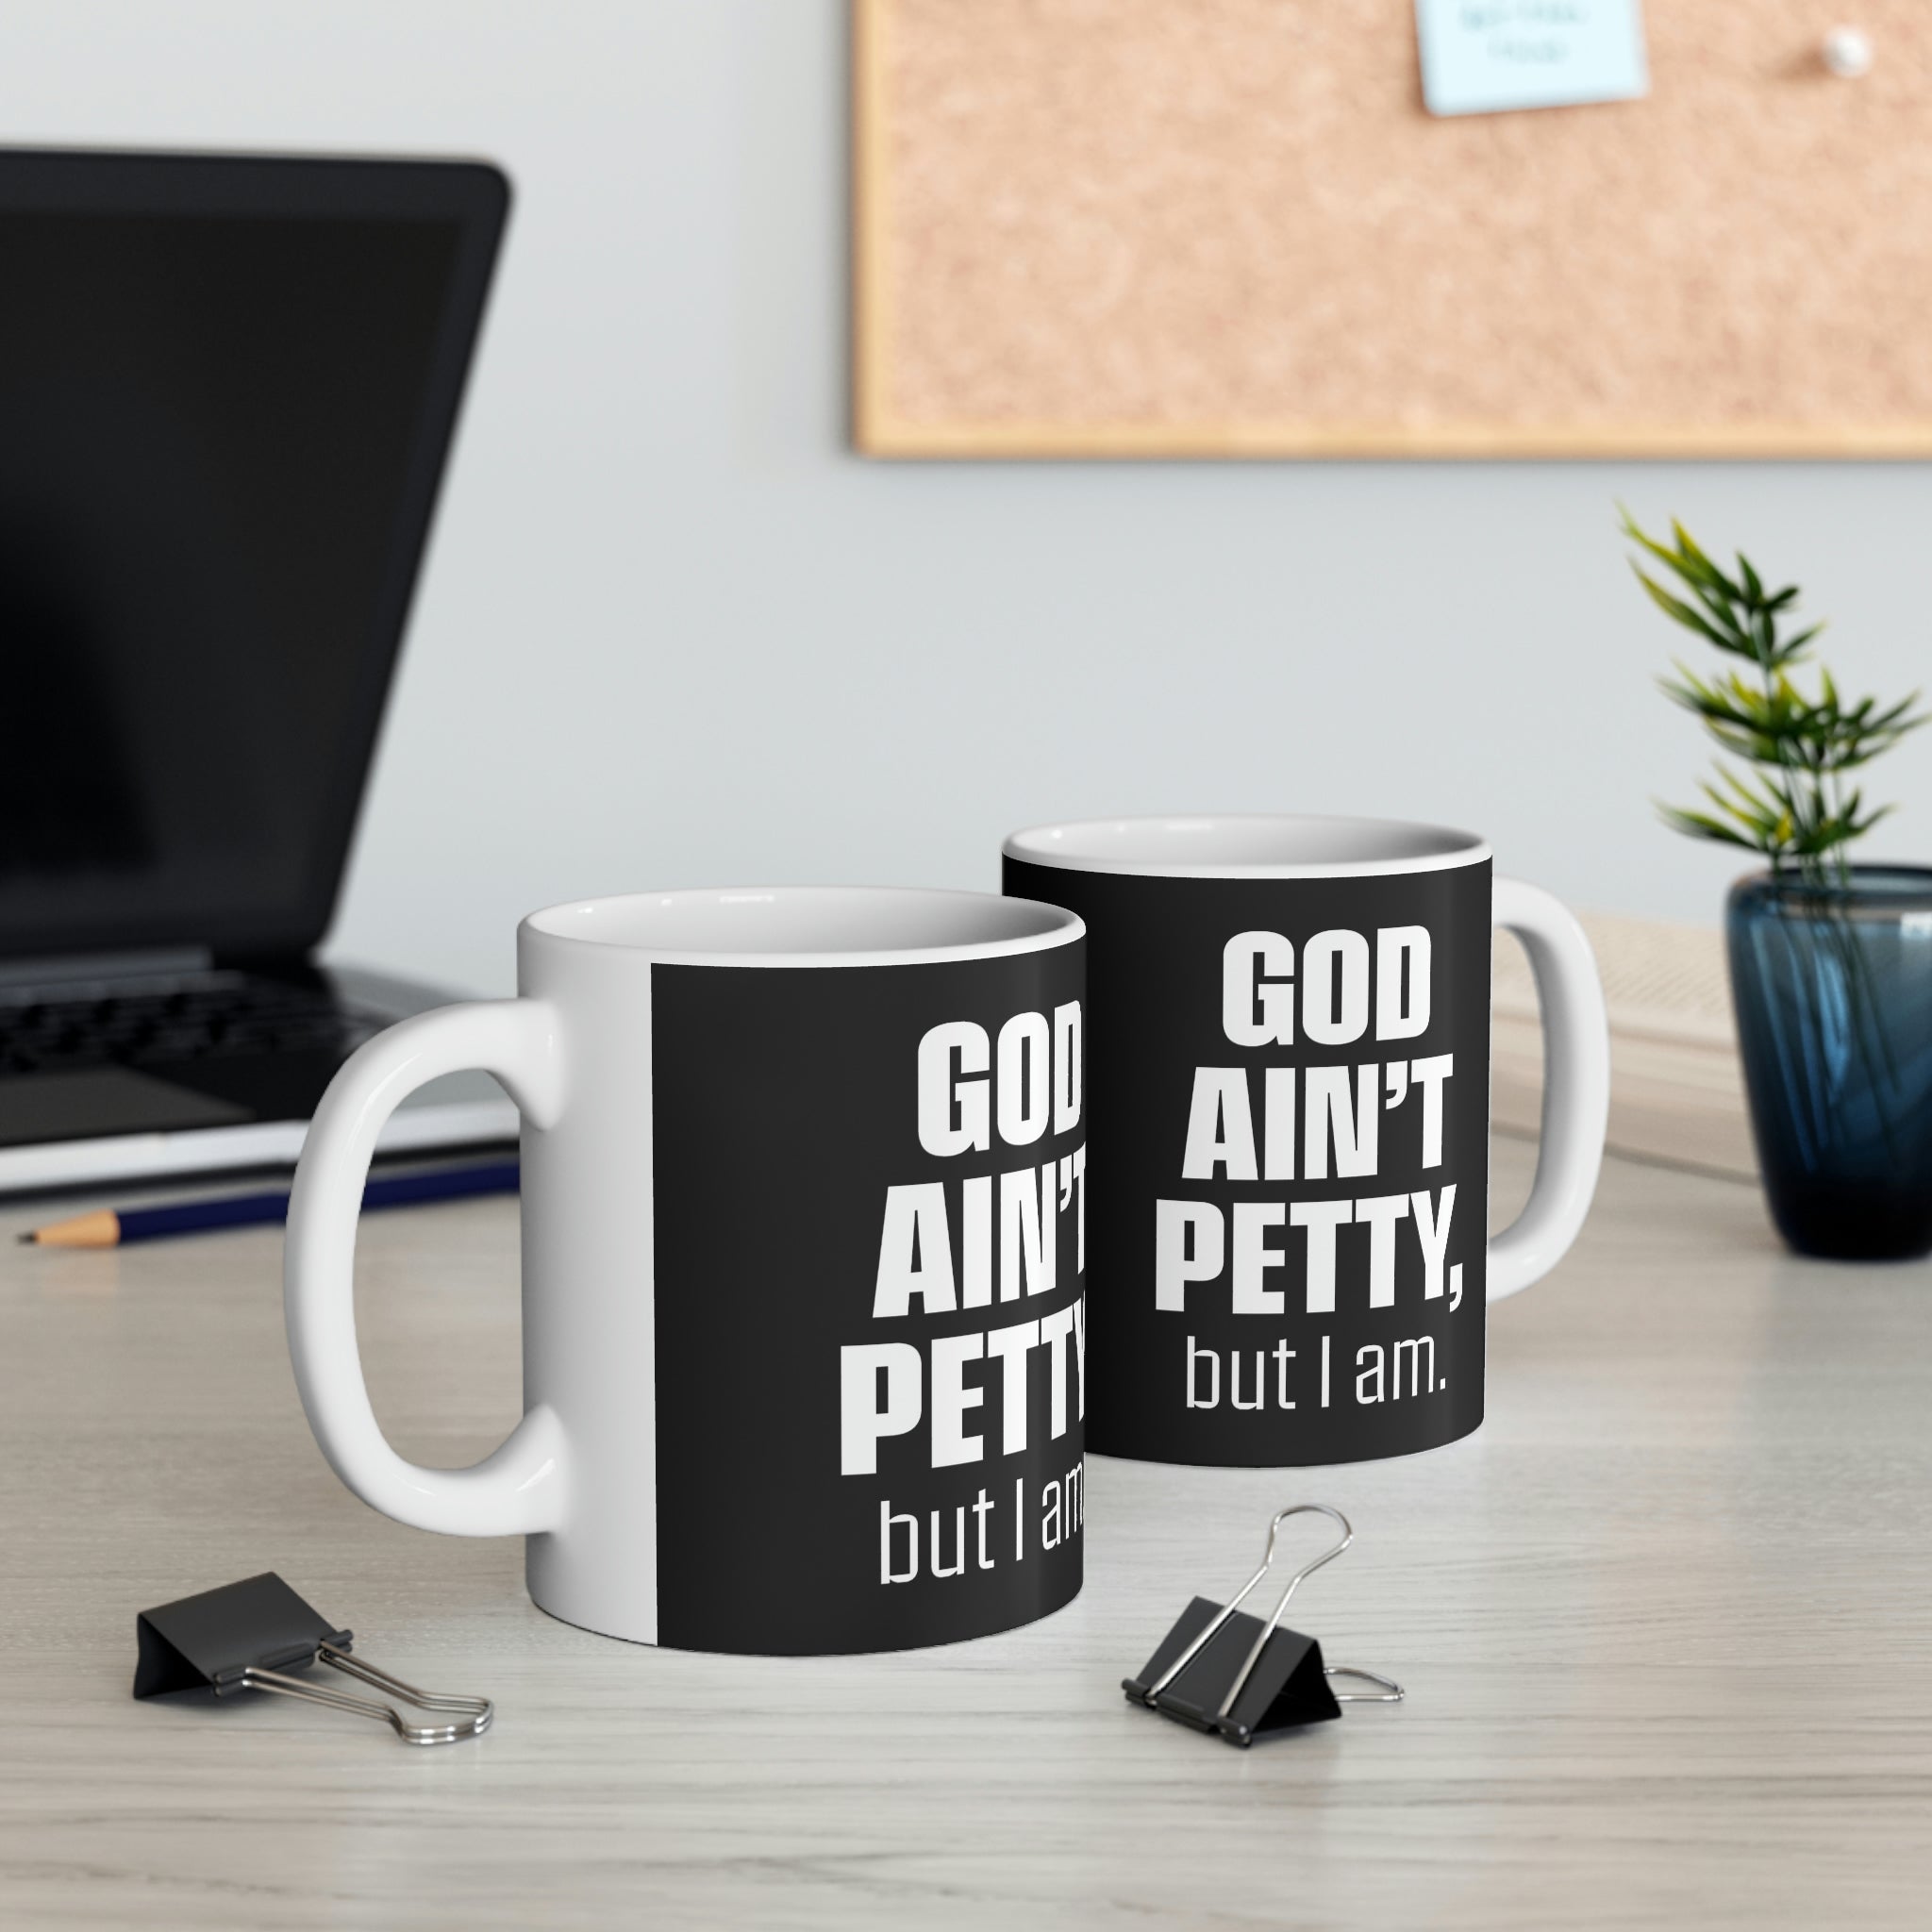 God Ain't Petty Ceramic Mug 11oz (Black/White)-Mug-The Original God Ain't Petty But I Am